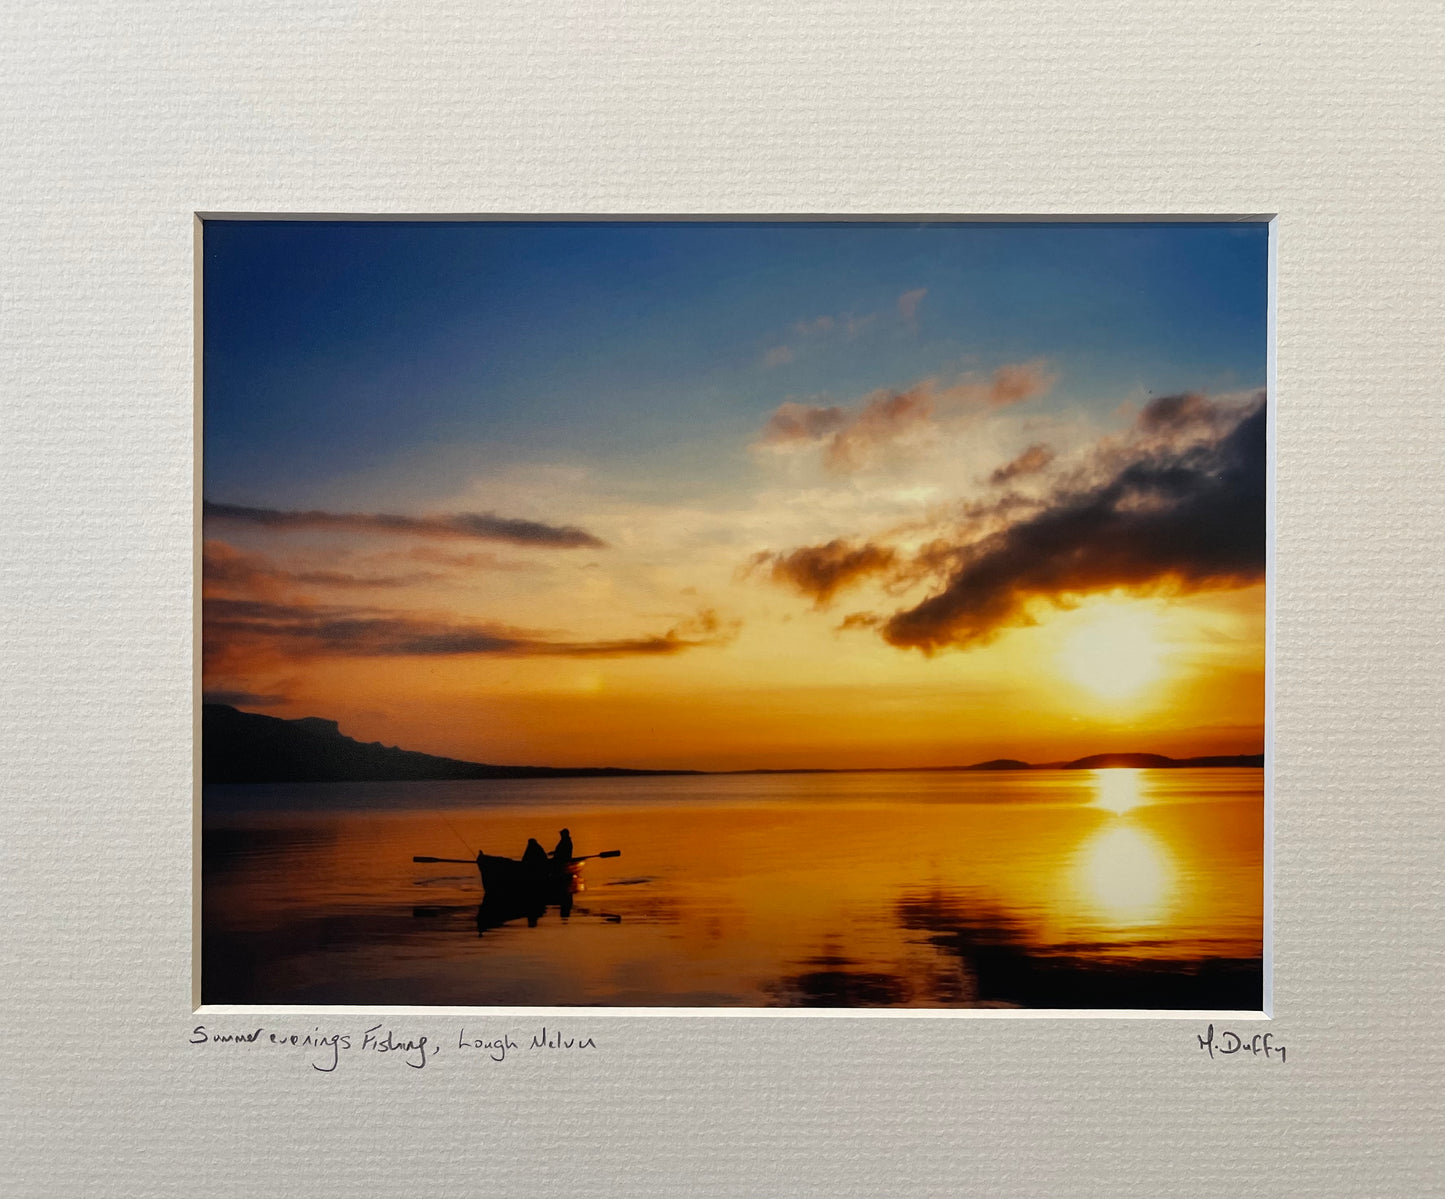 Sunset Fishing Lough Melvin- Photograph